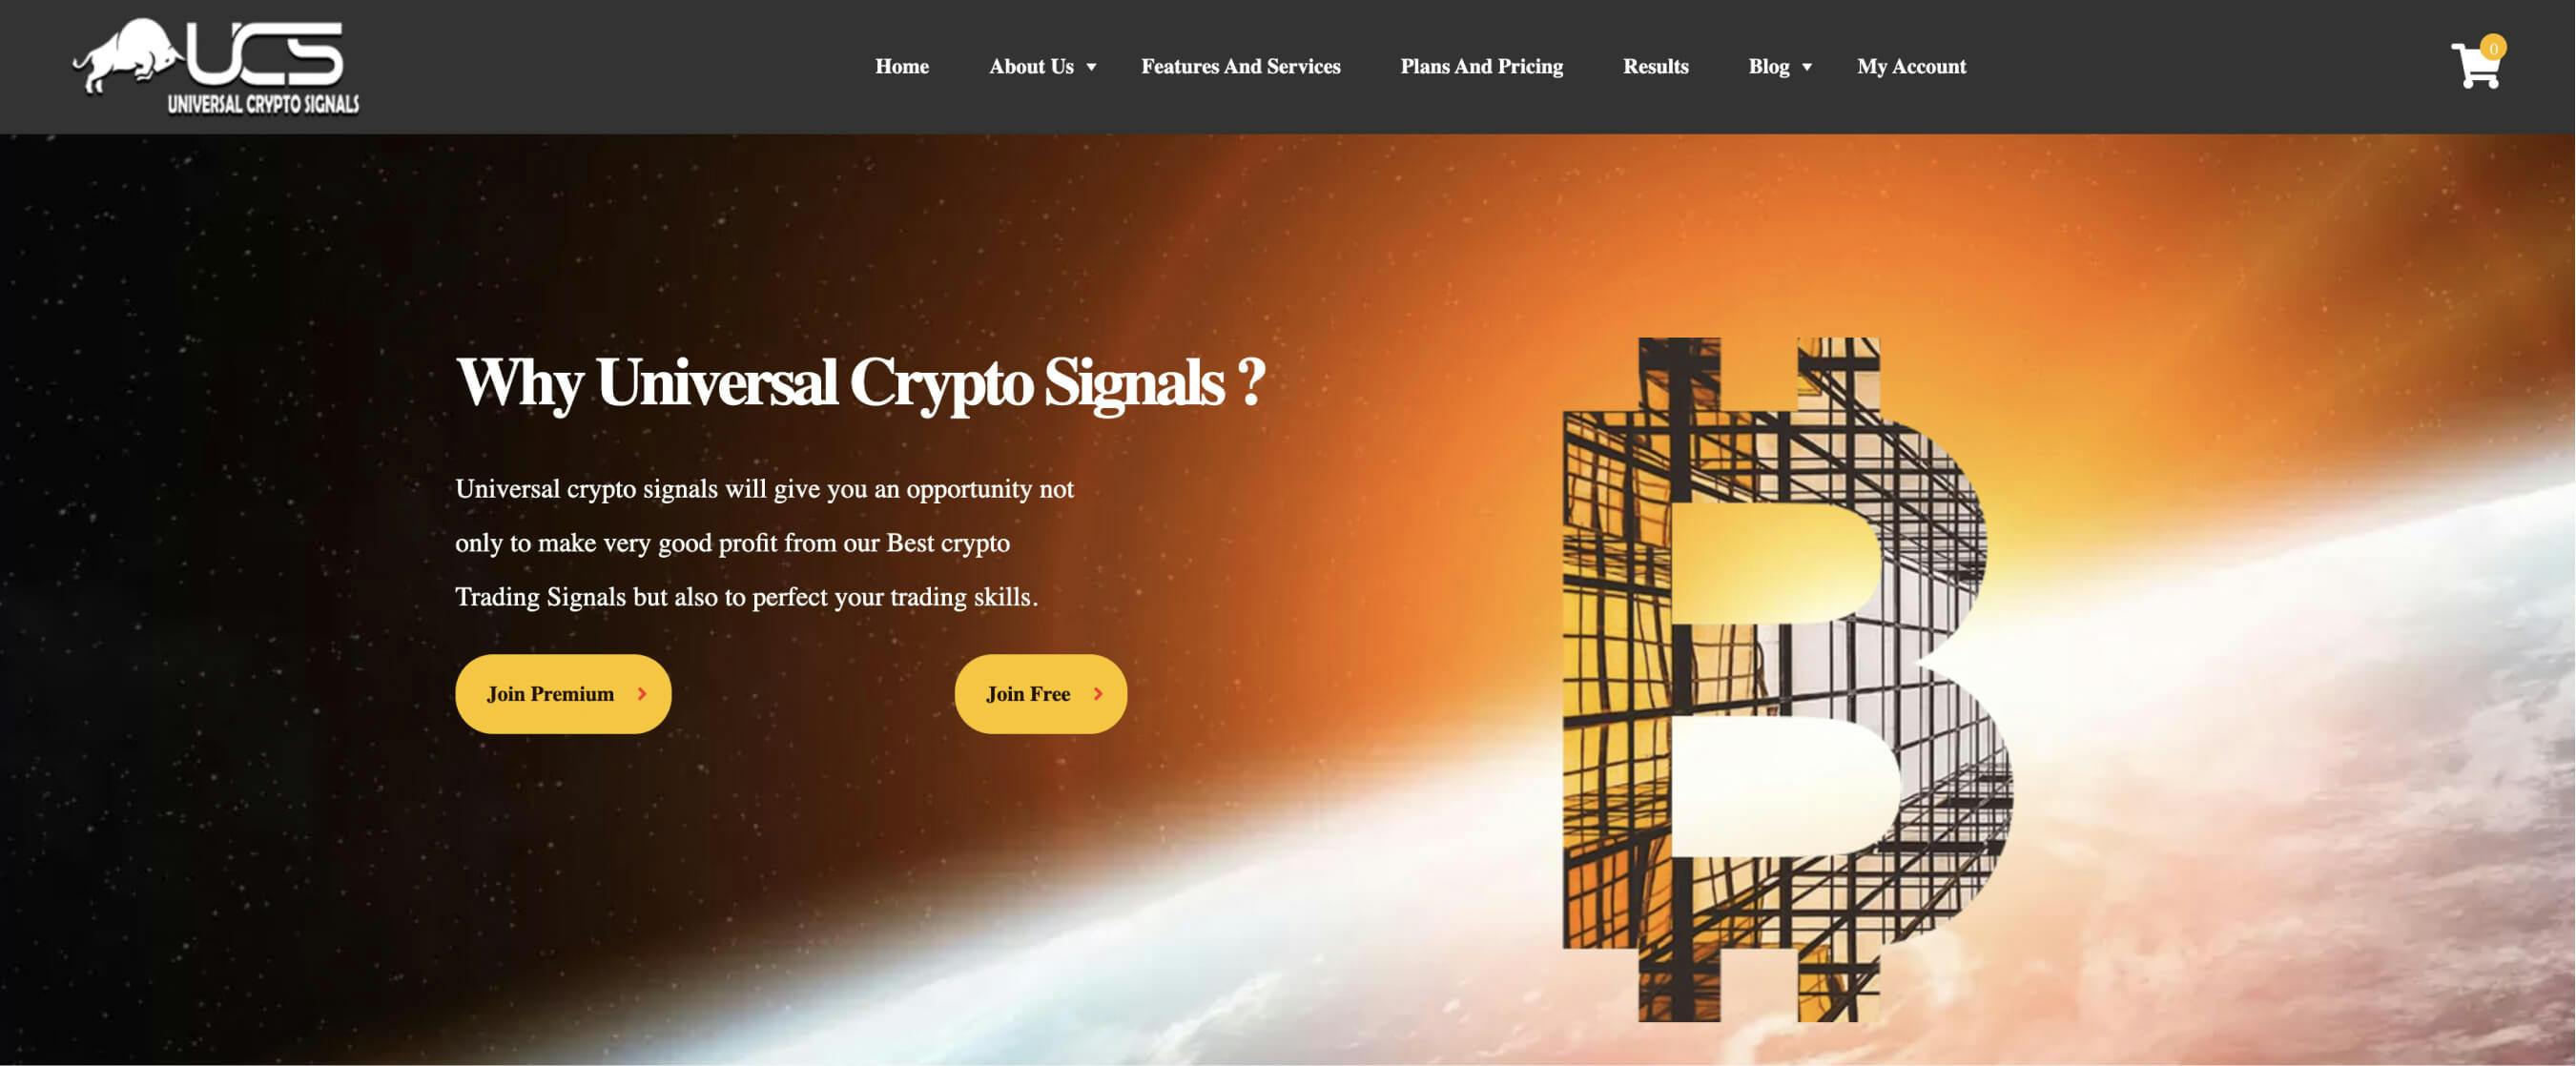 Universal Crypto Signals